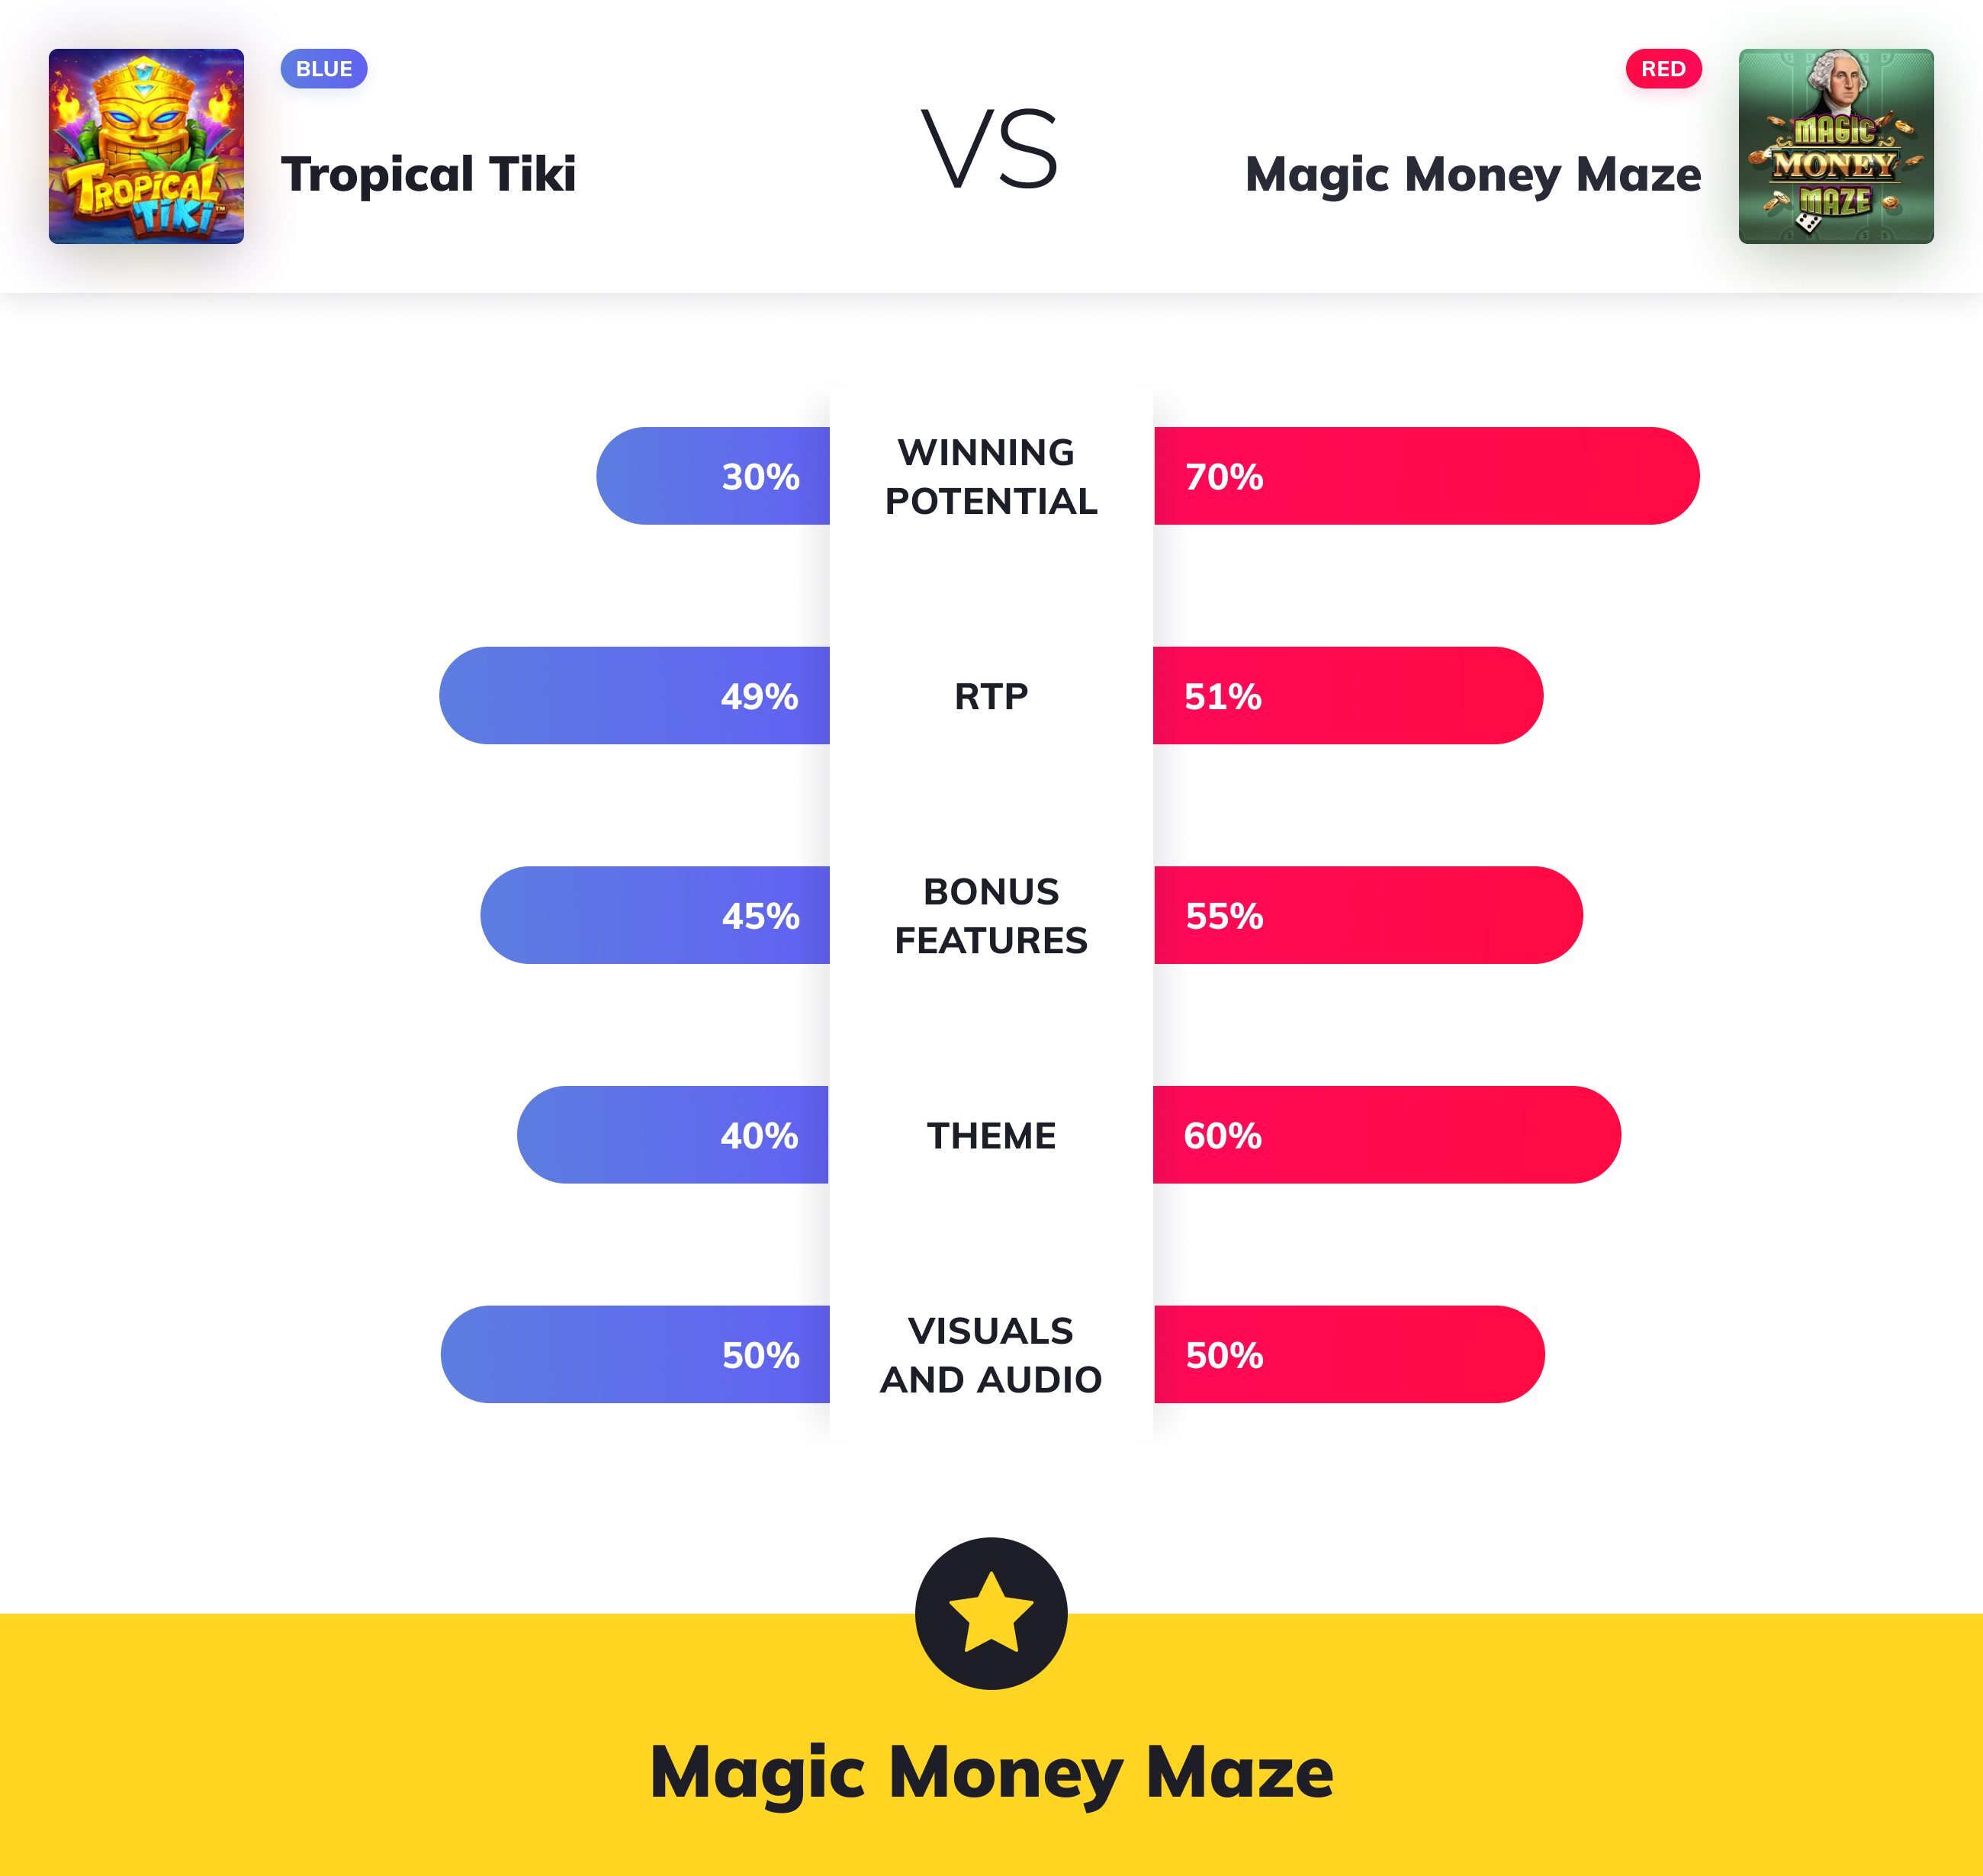 Slot Wars - Tropical Tiki VS Magic Money Maze